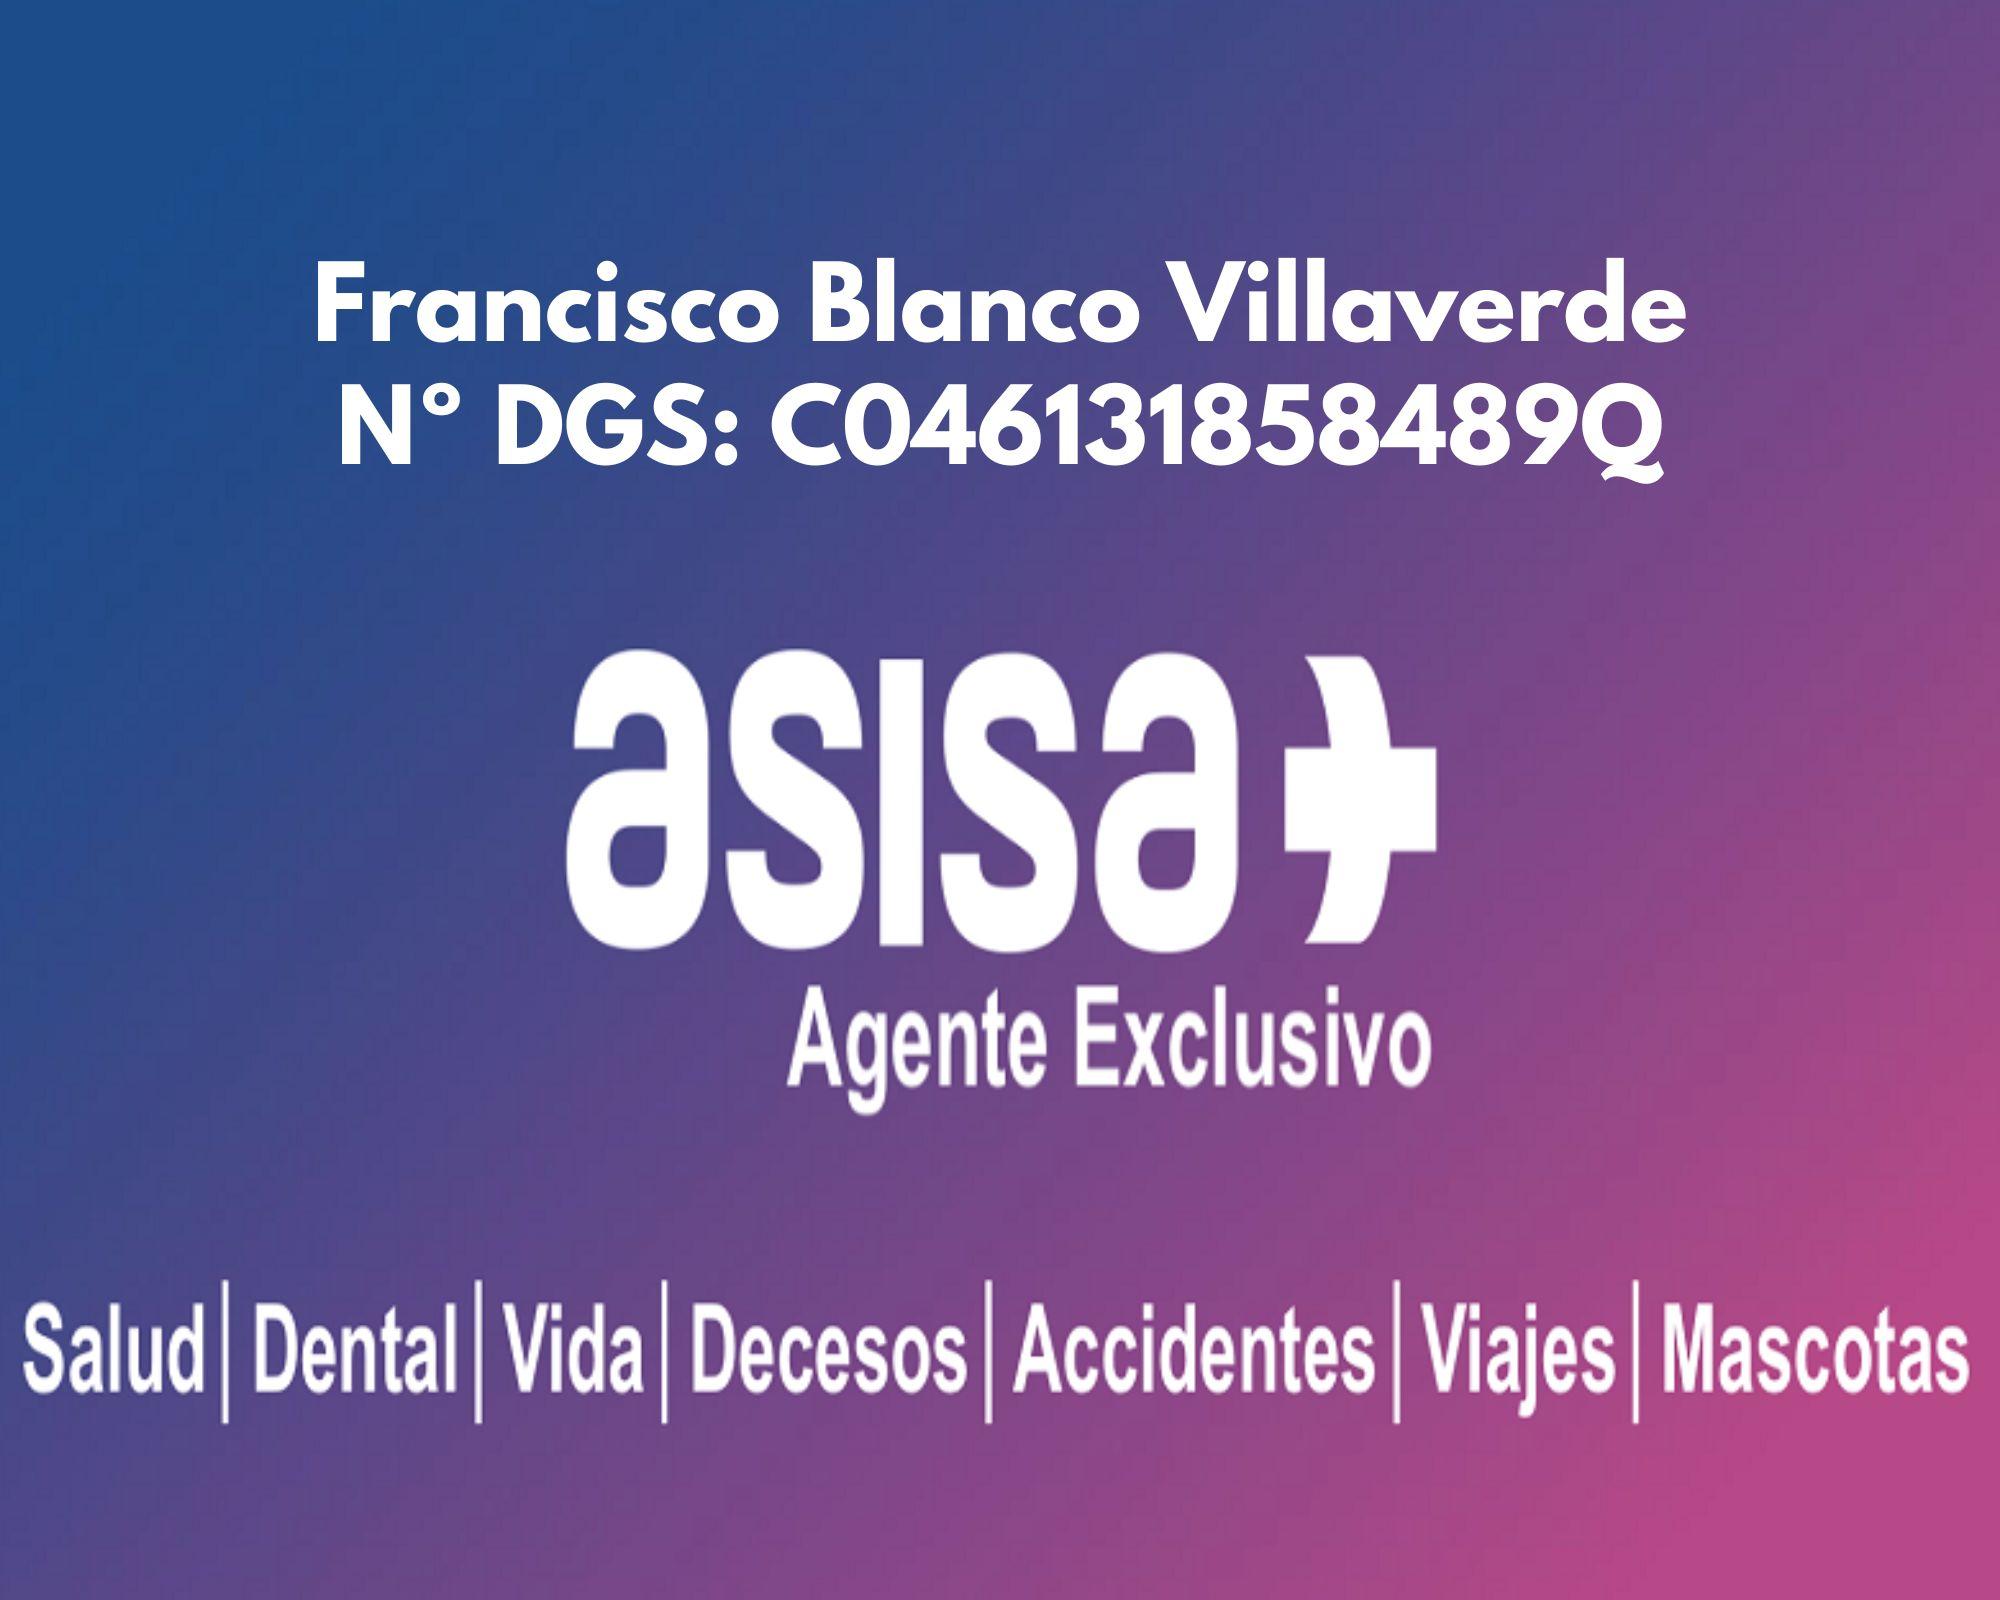 Francisco Blanco Villaverde Nº Dgs C046131858489 Q